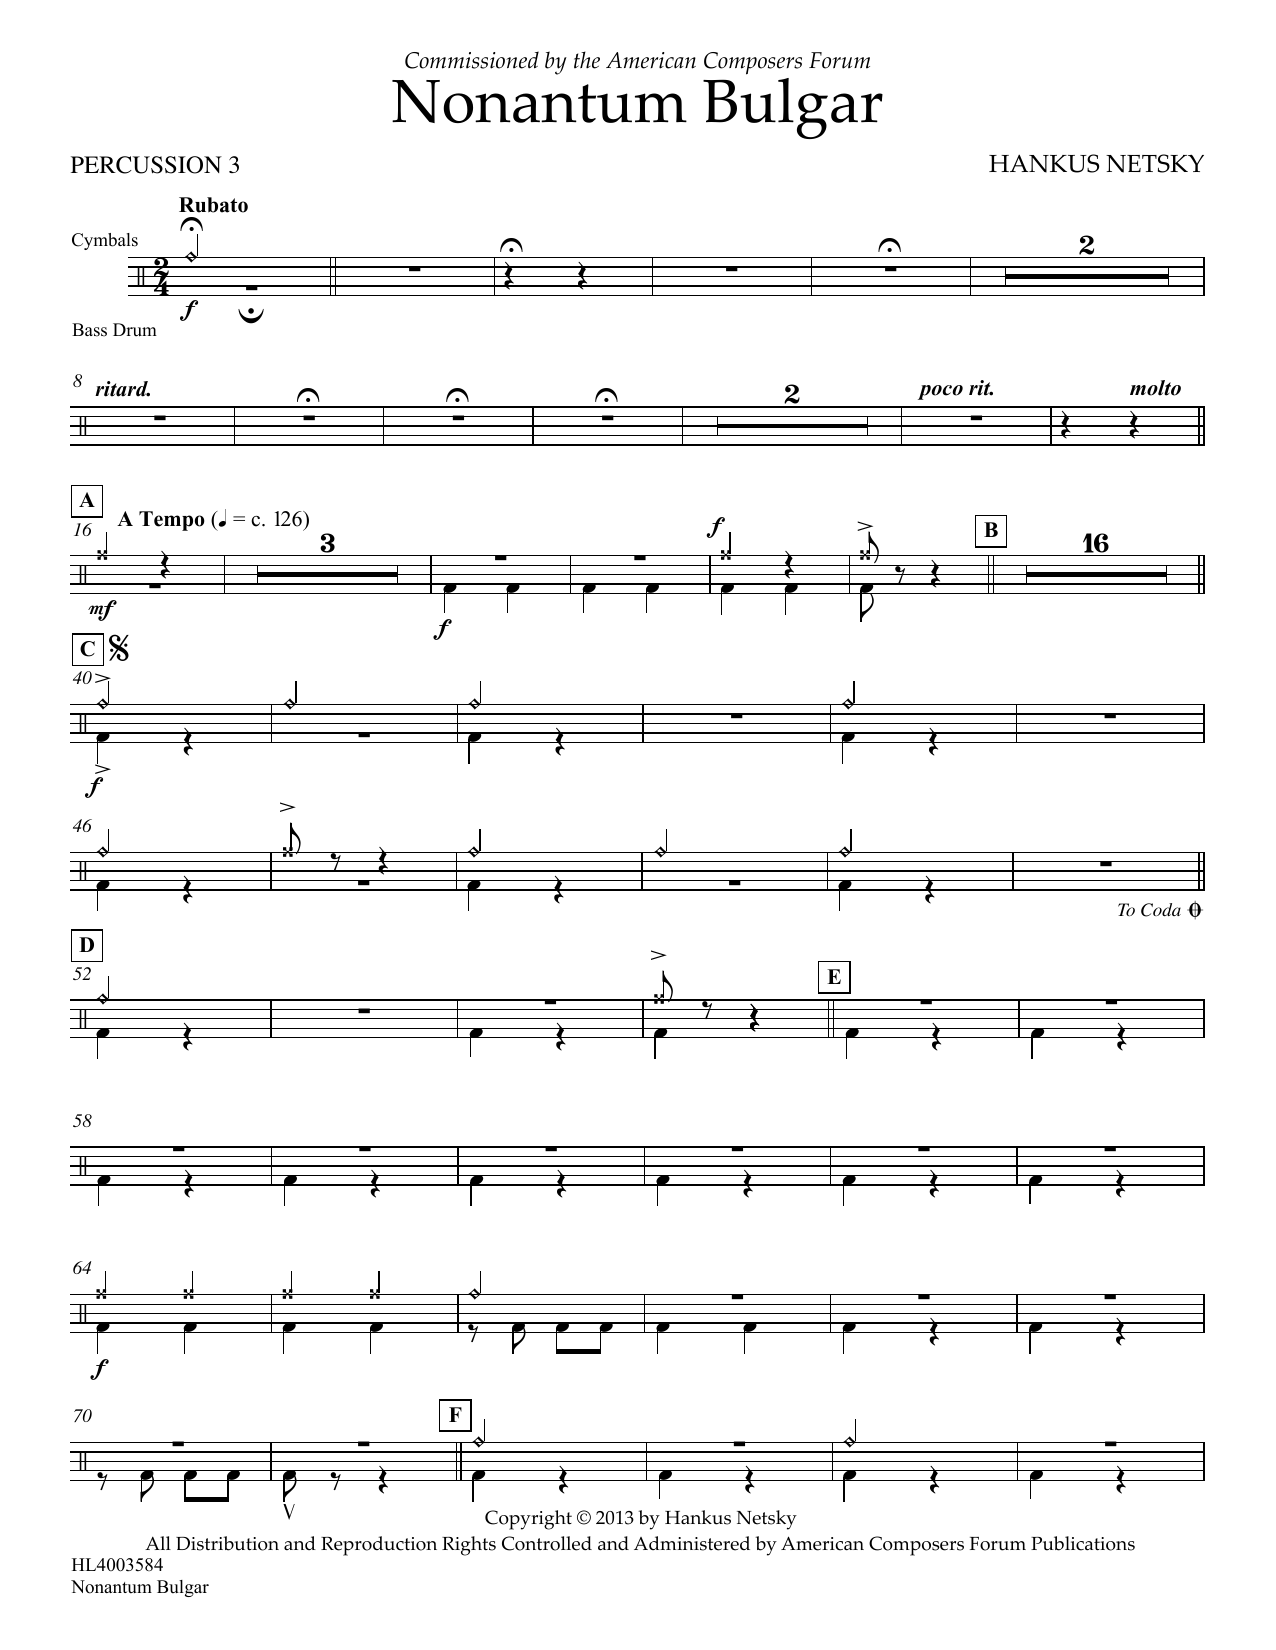 Hankus Netsky Nonantum Bulgar - Percussion 3 Sheet Music Notes & Chords for Concert Band - Download or Print PDF